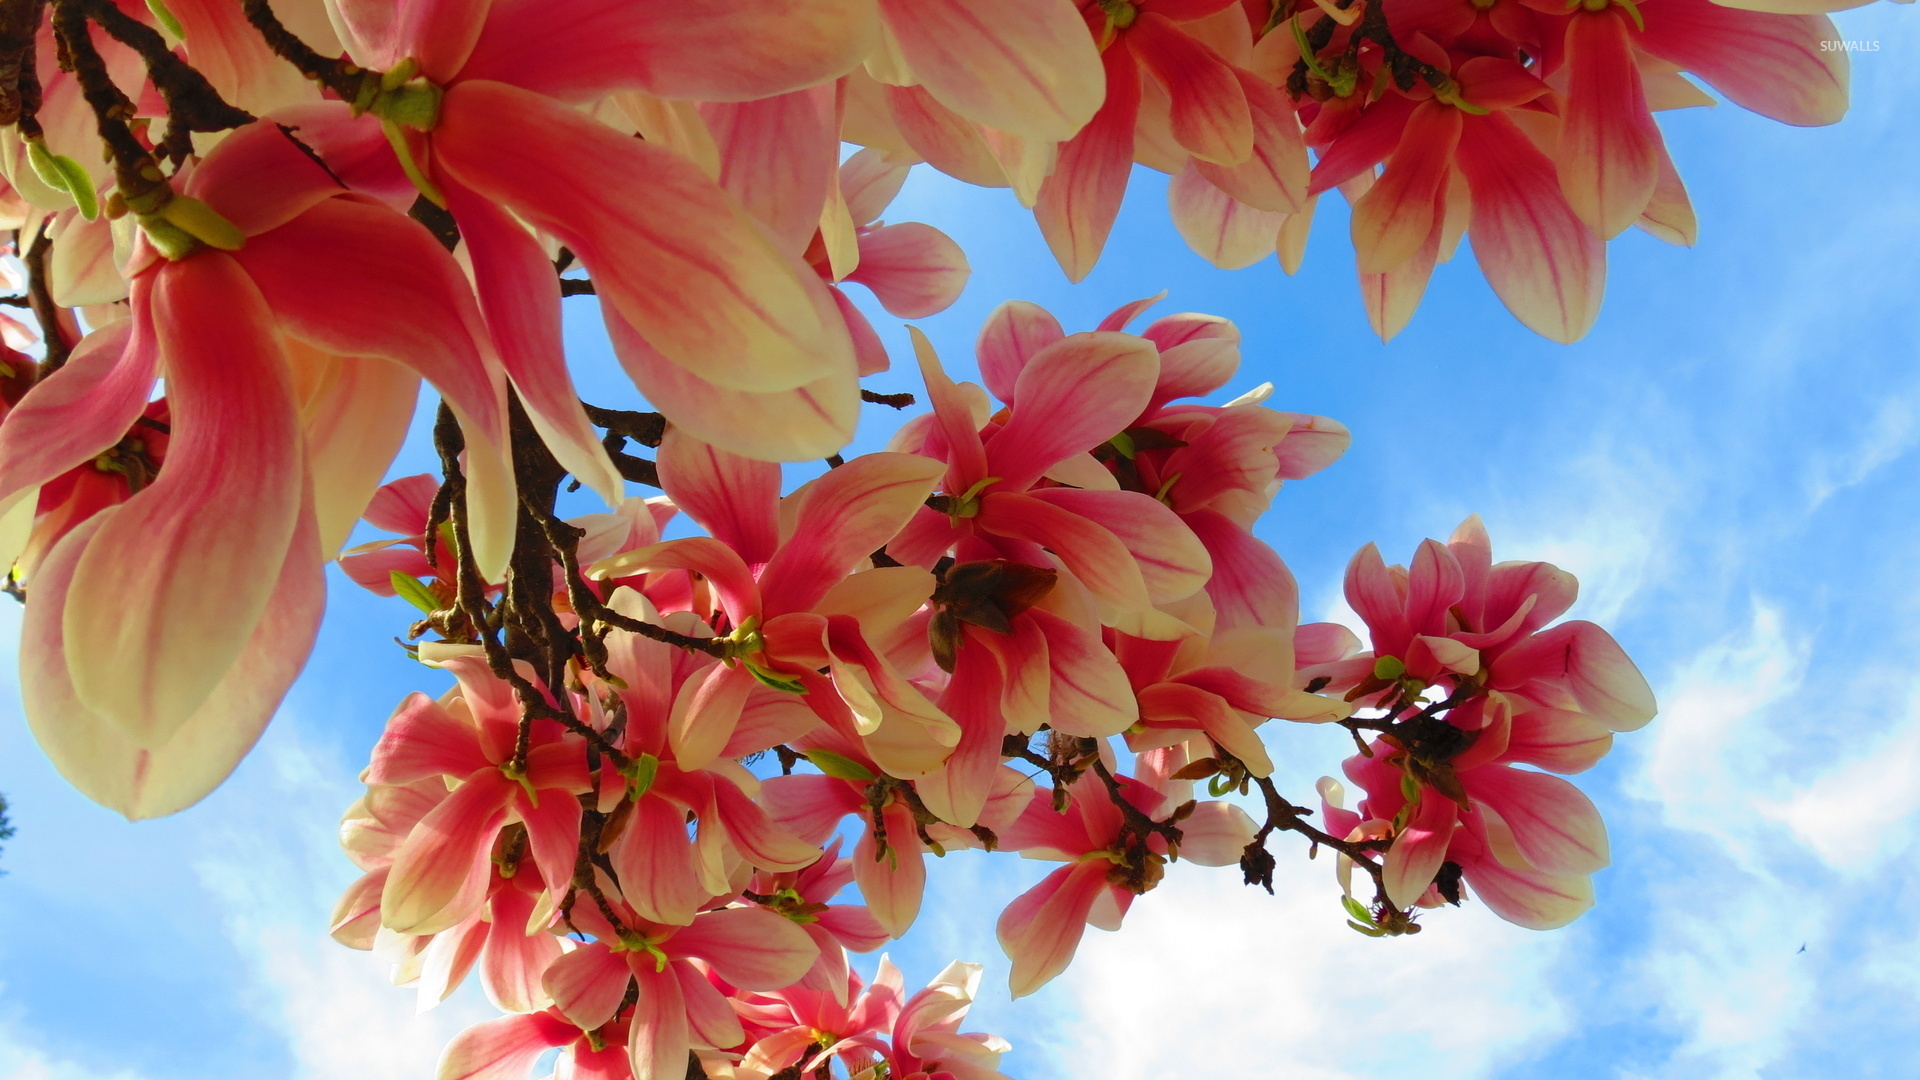 Beautiful magnolias, Floral wallpapers, Nature's splendor, Blossom in full, 1920x1080 Full HD Desktop